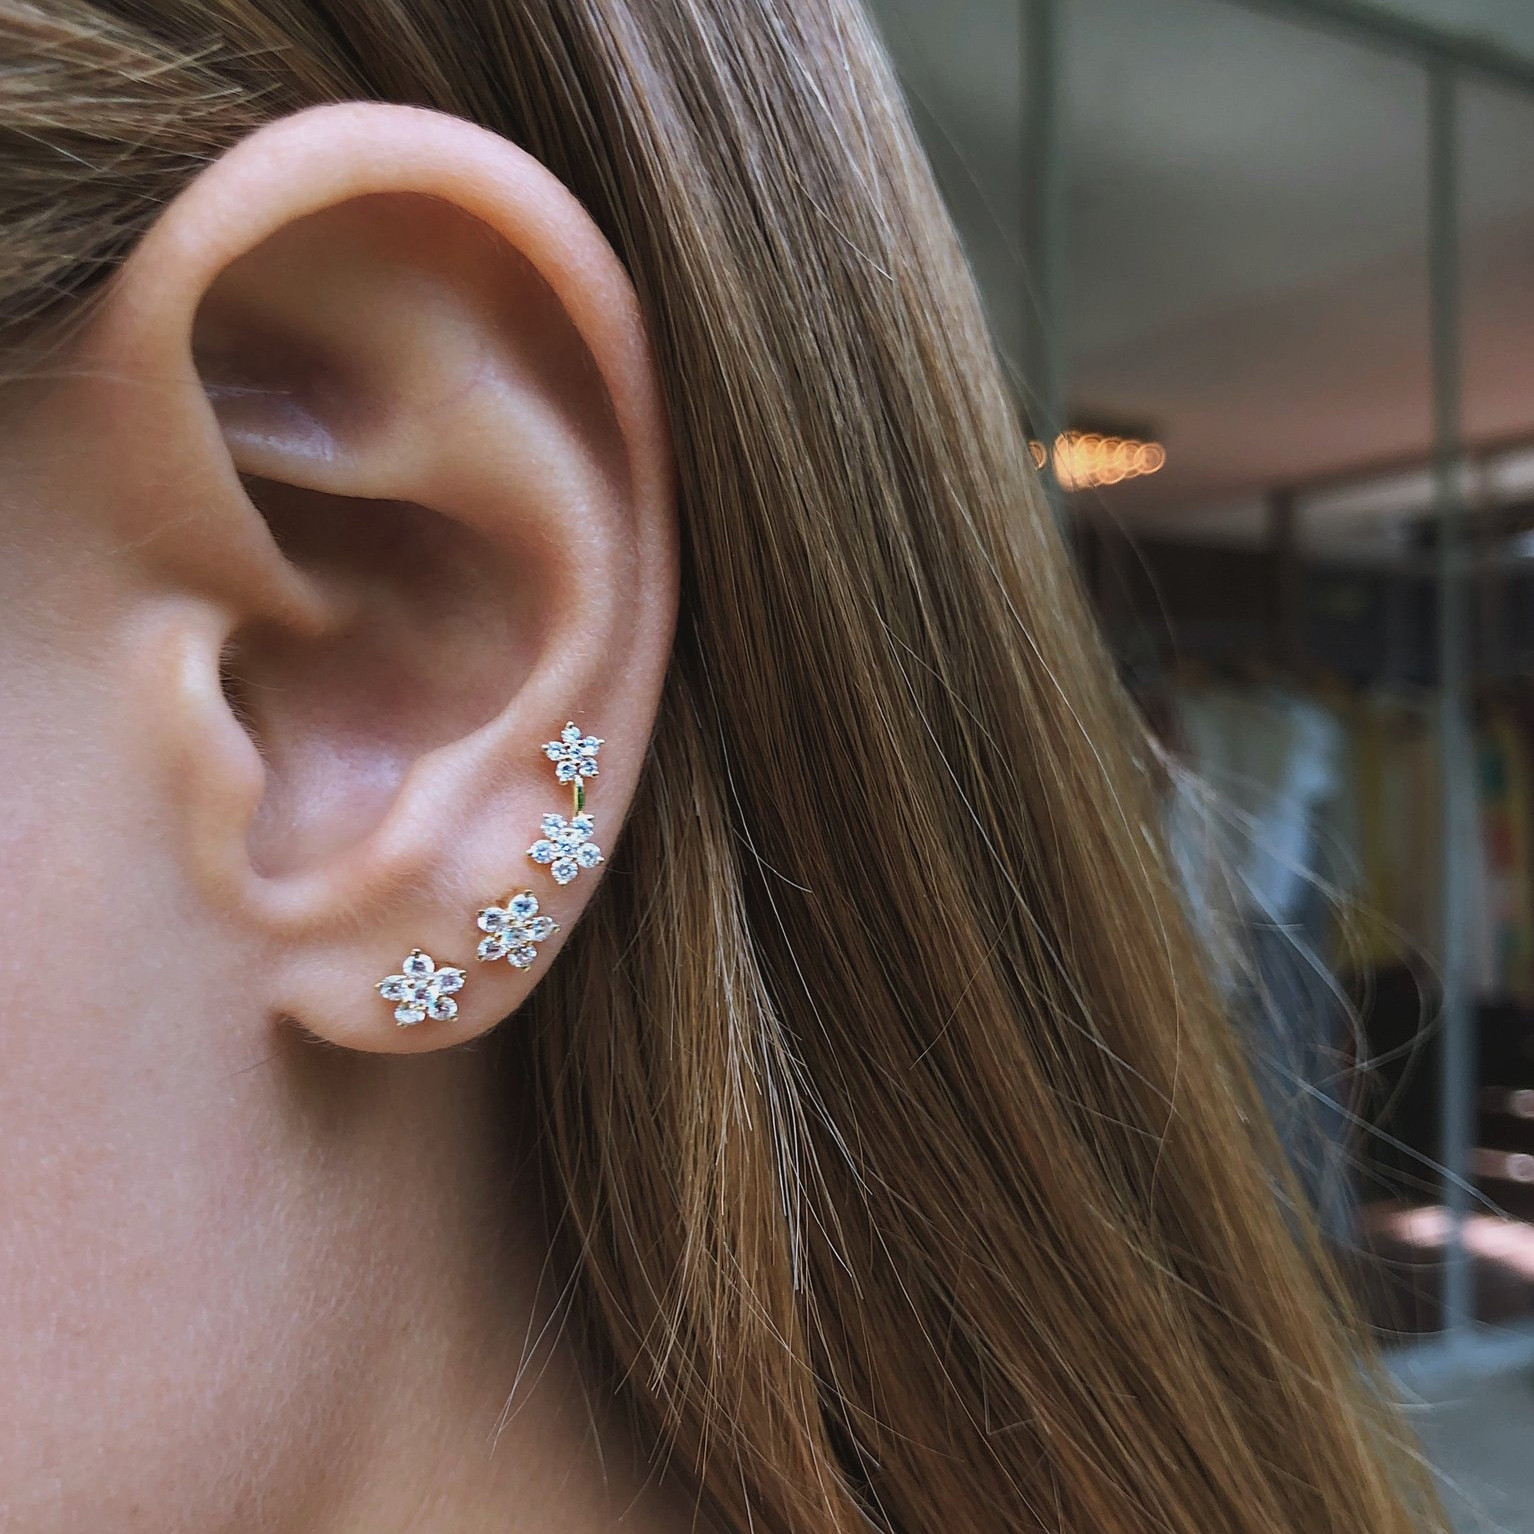 Single & Double Flower Diamond Stud Earring Set by EF Collection on Model 